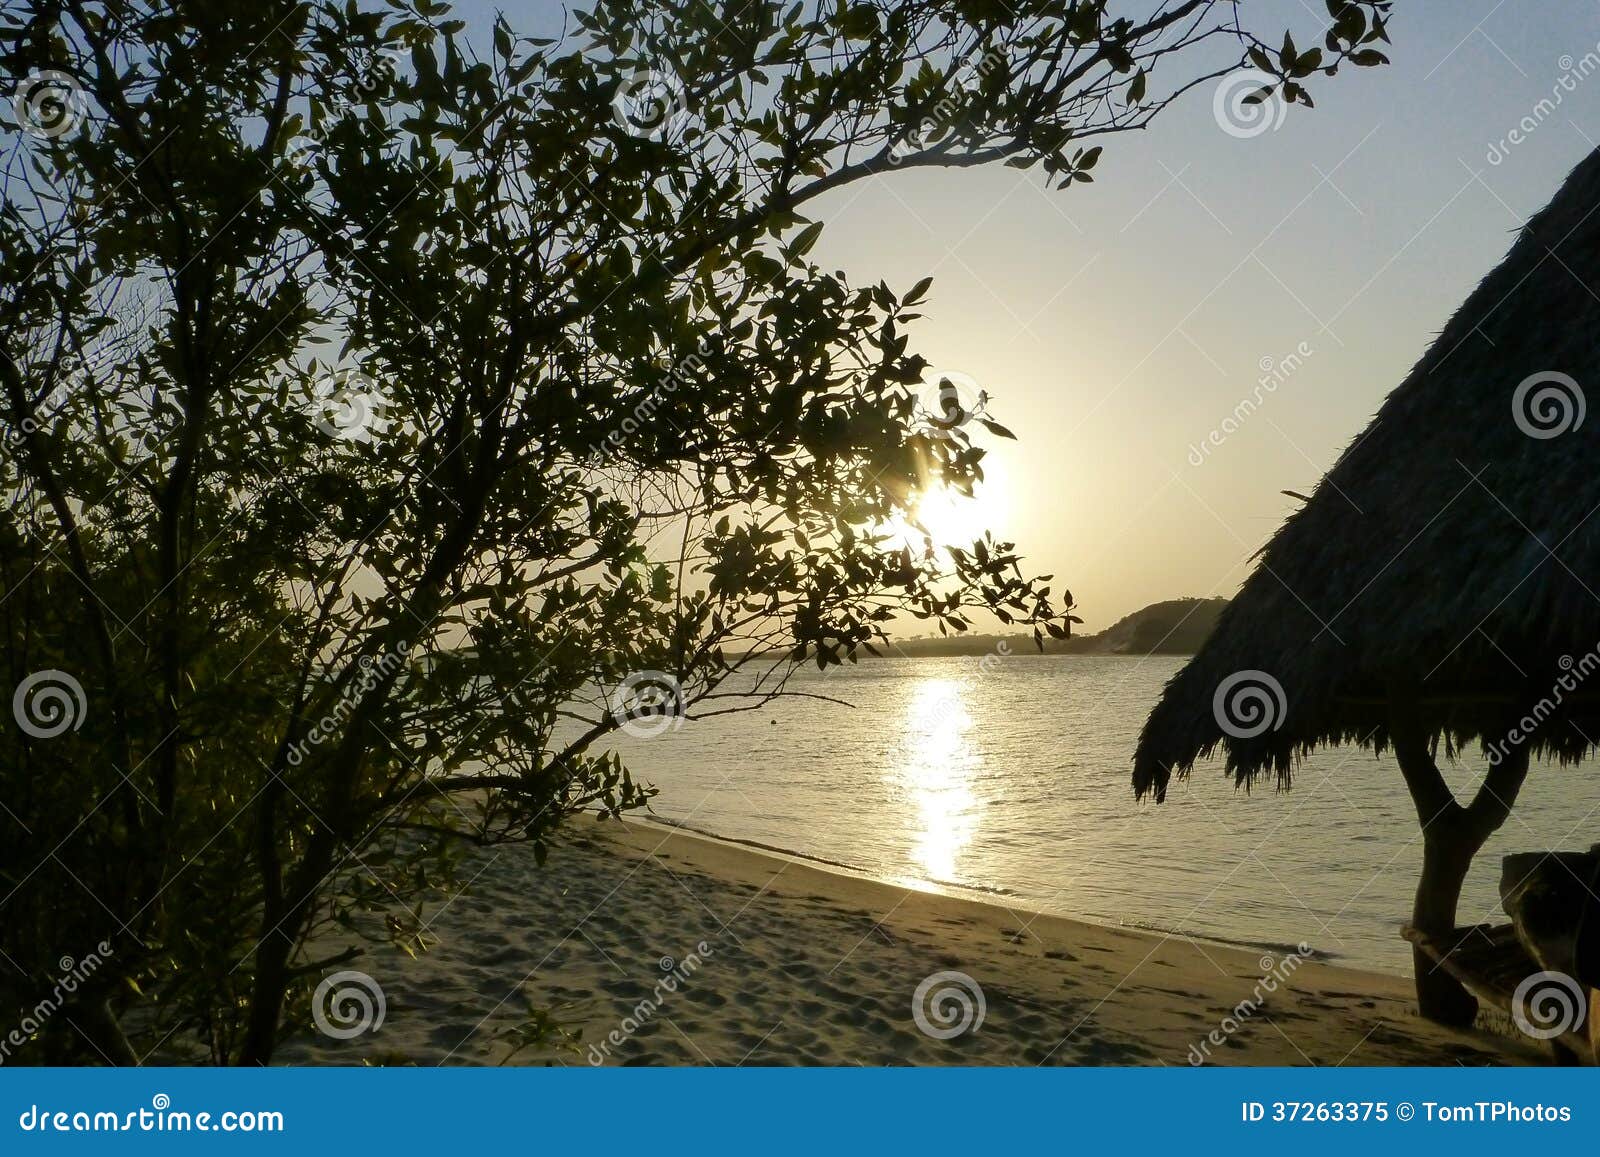 Sunset in Kenya stock image. Image of sensational, beach - 37263375